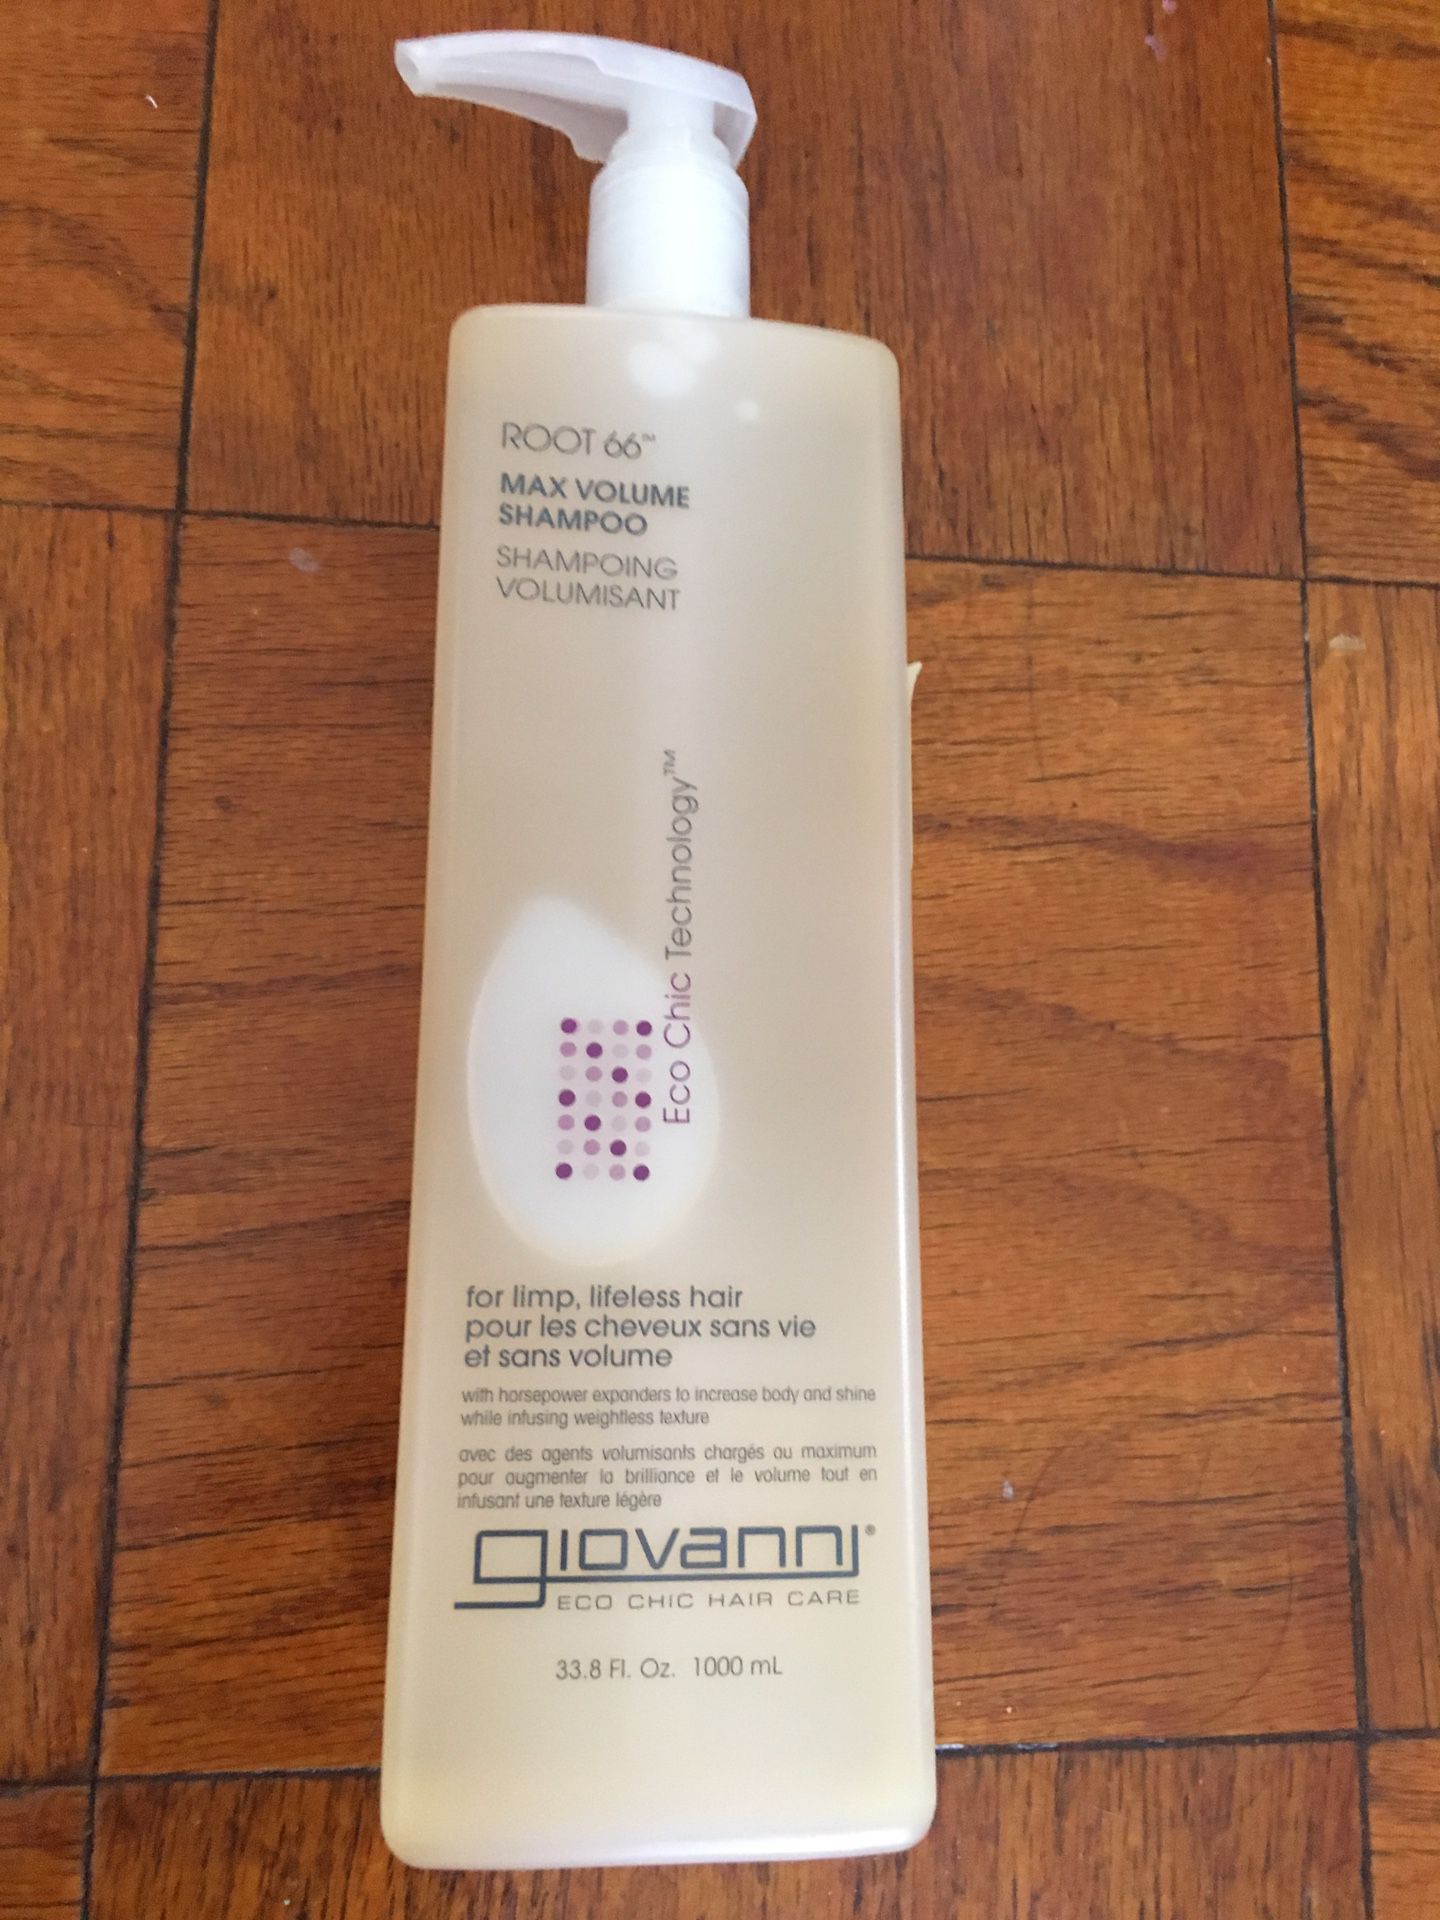 Giovanni echo chic hair care - shampoo 33.8 ozs